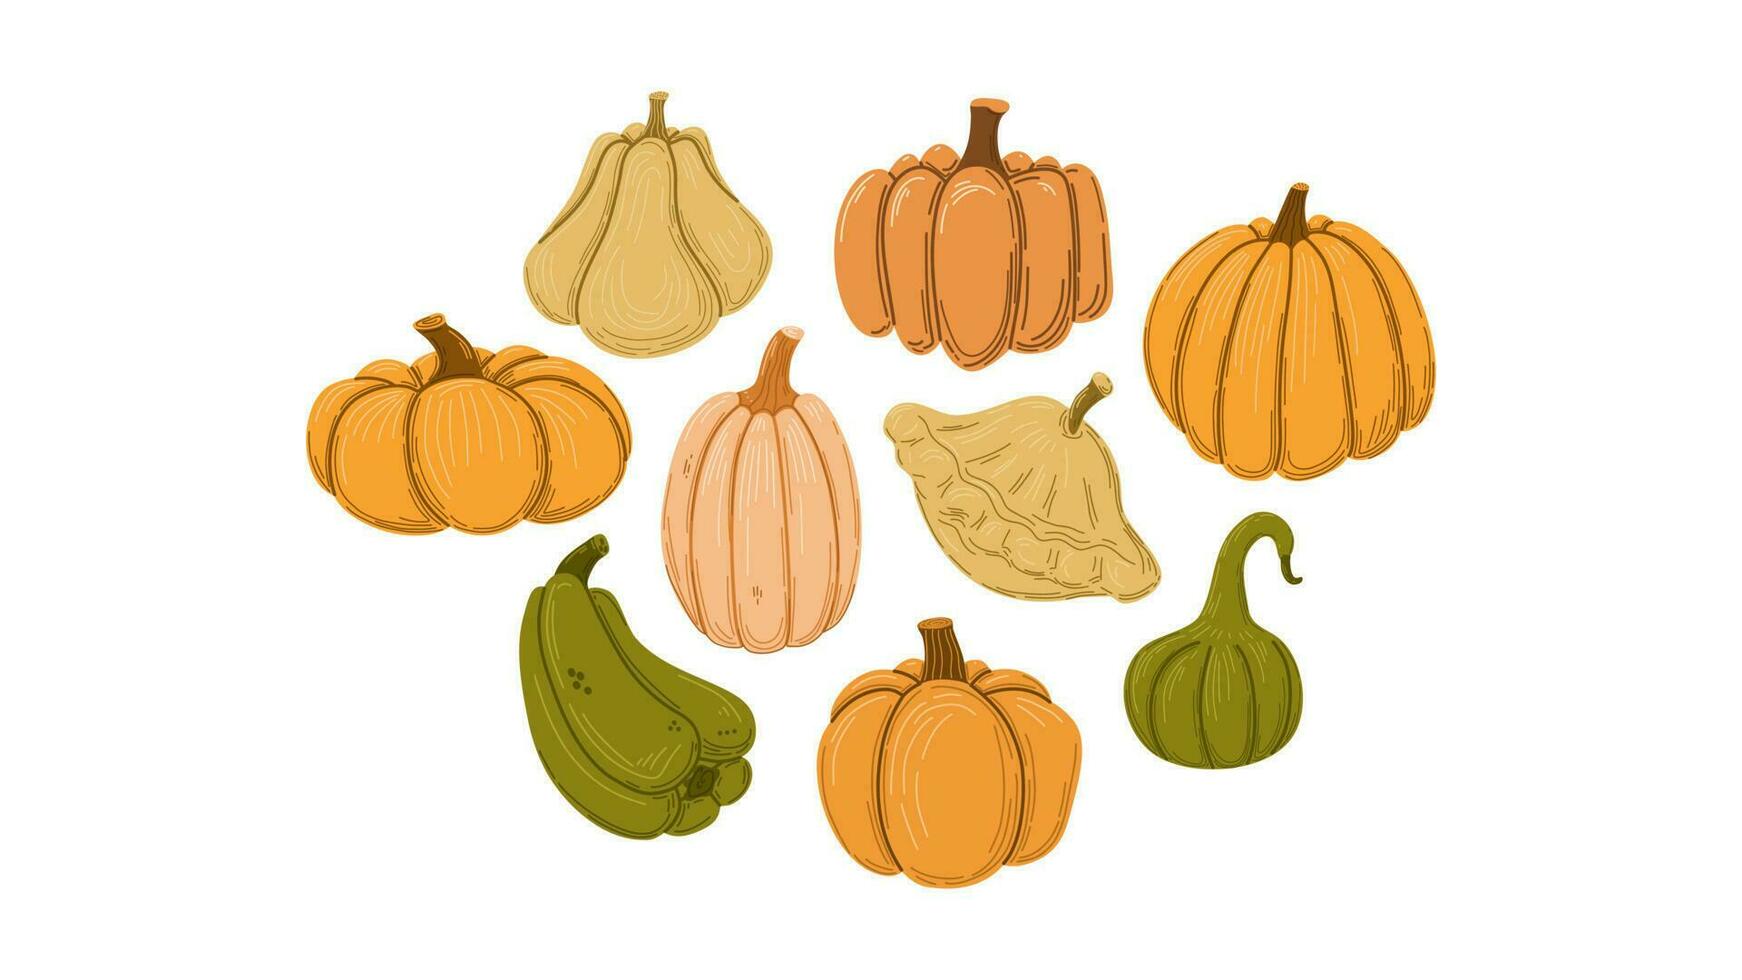 Squashes and pumpkins illustration. Vector hand drawn set.